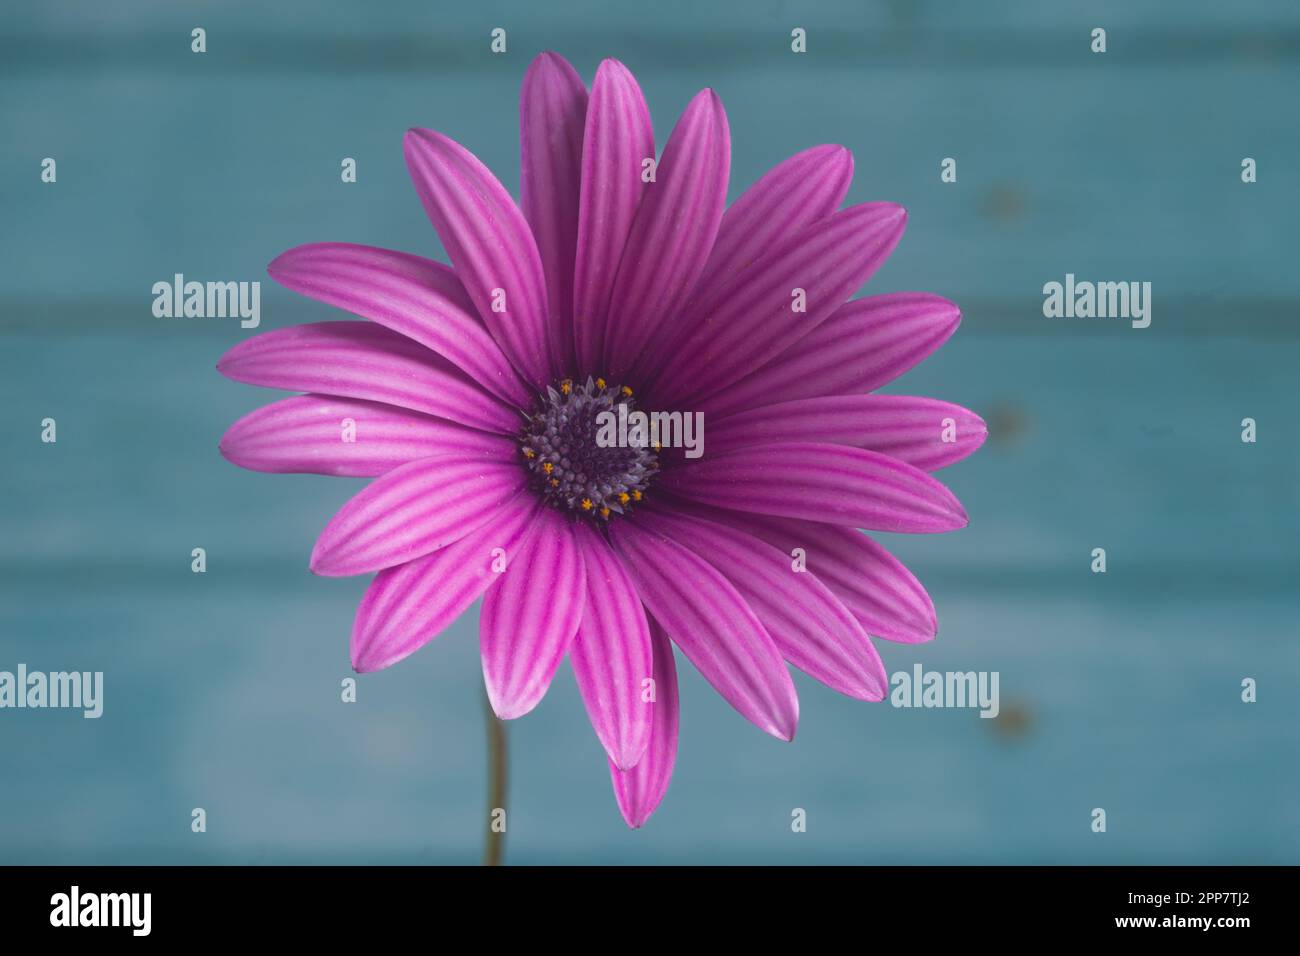 African daisy flower (Dimorphotheca ecklonis), blurred light blue wood background Stock Photo